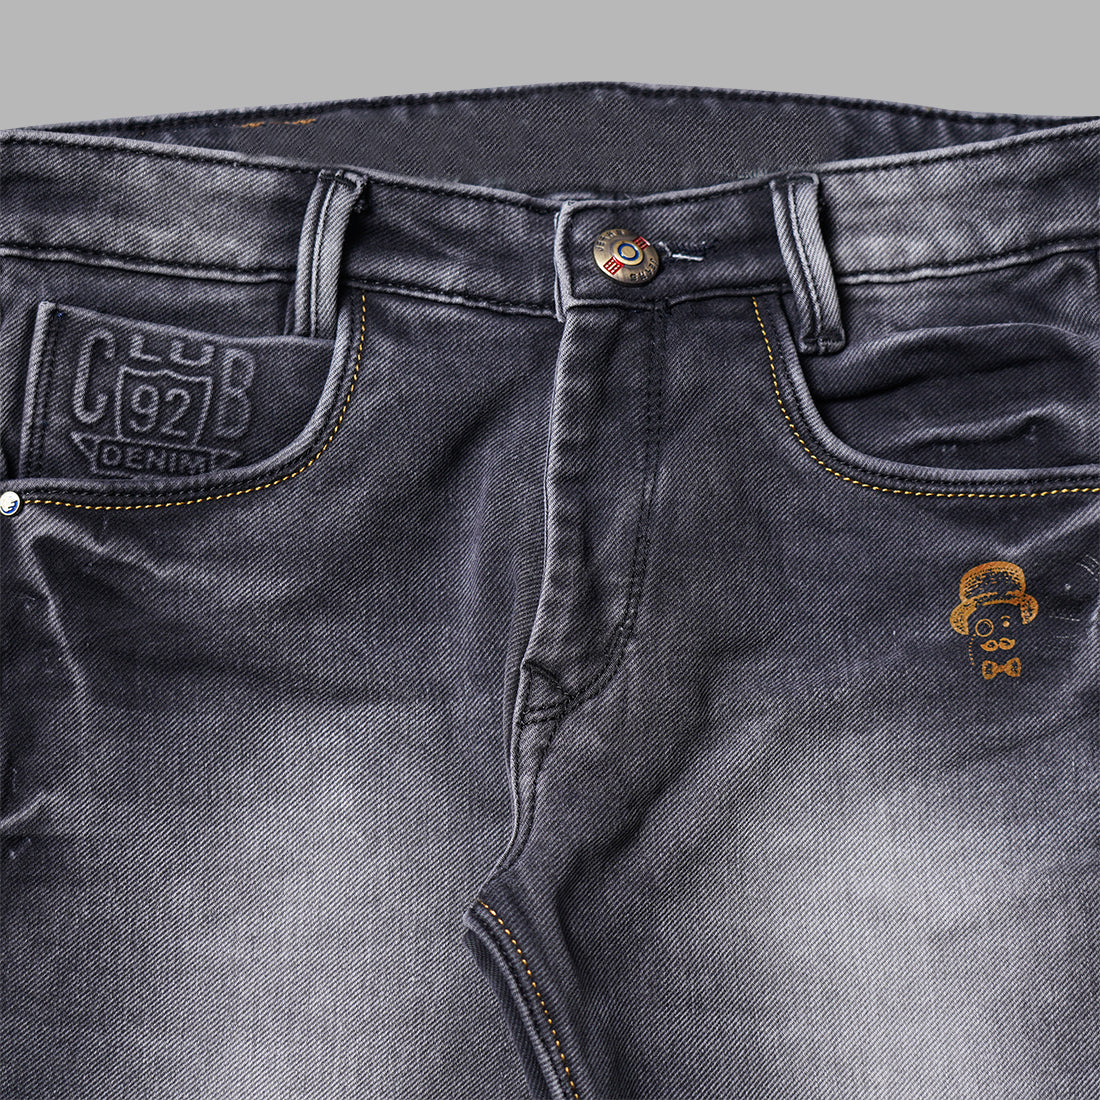 Levi's 501 Original Button Fly Dark Blue Denim Jeans Men's Sizes 32x32 -  36x32 | eBay